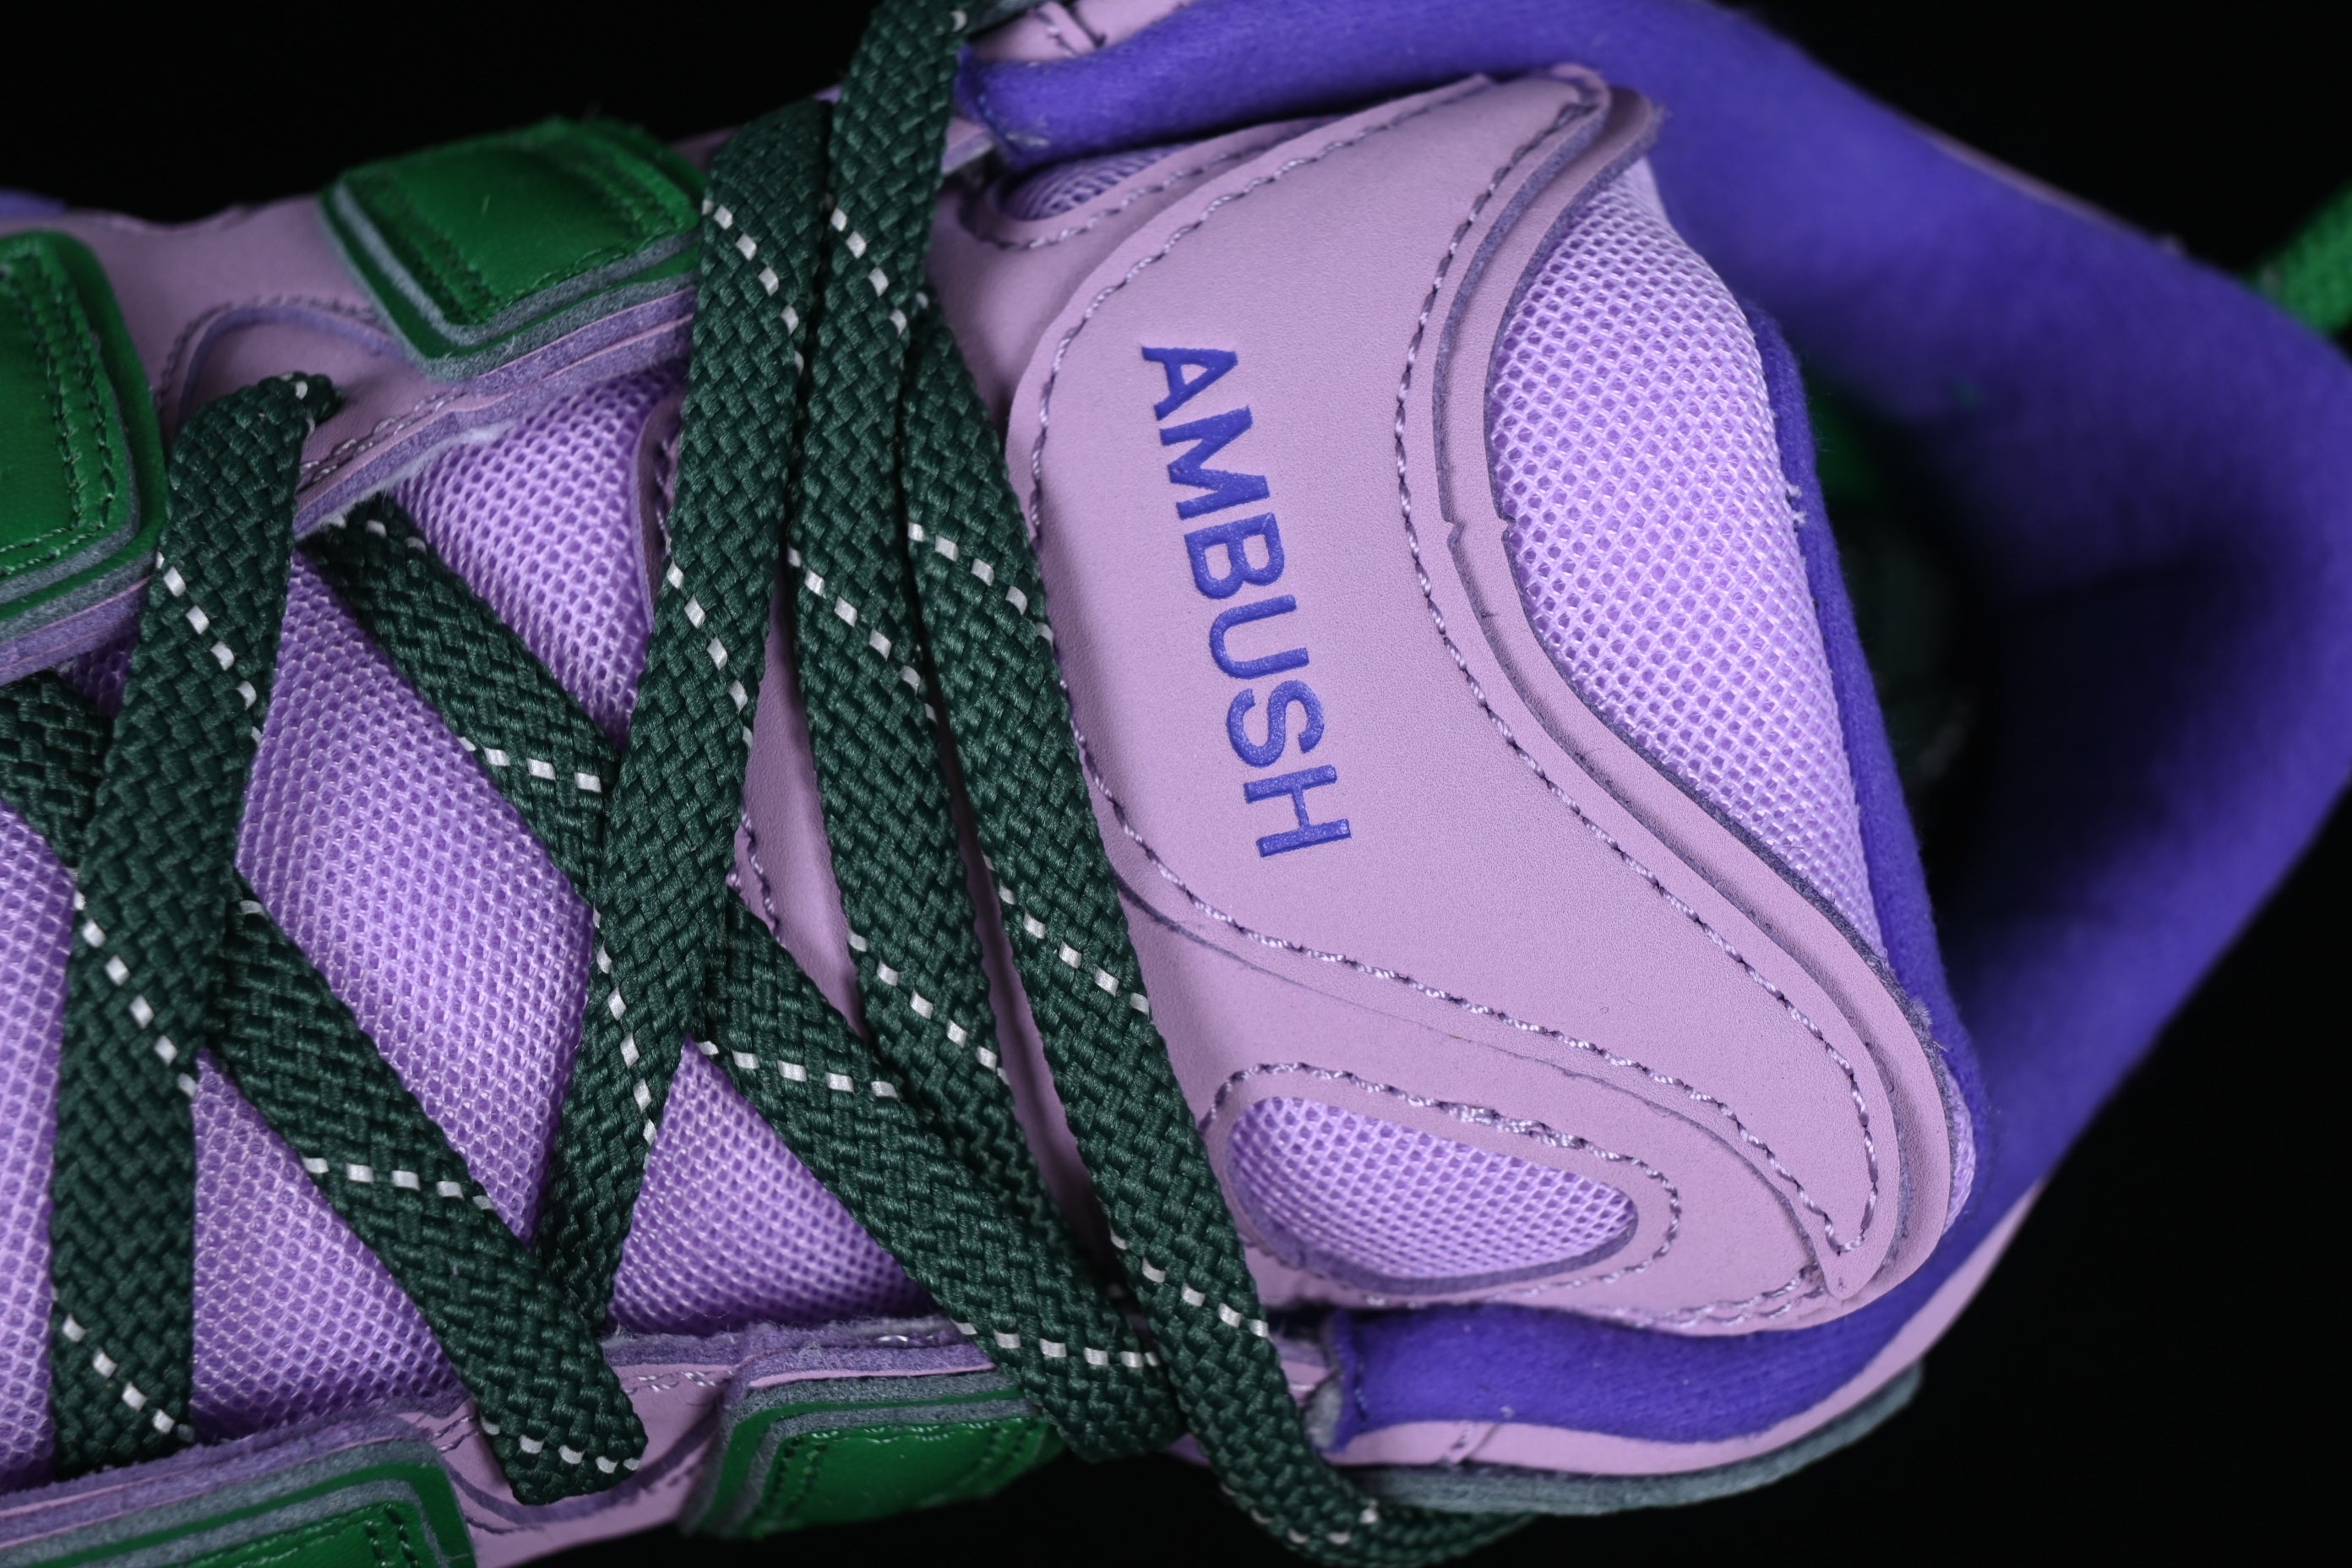 Ambush x NikeMens Air More Uptempo Low - Apple Green